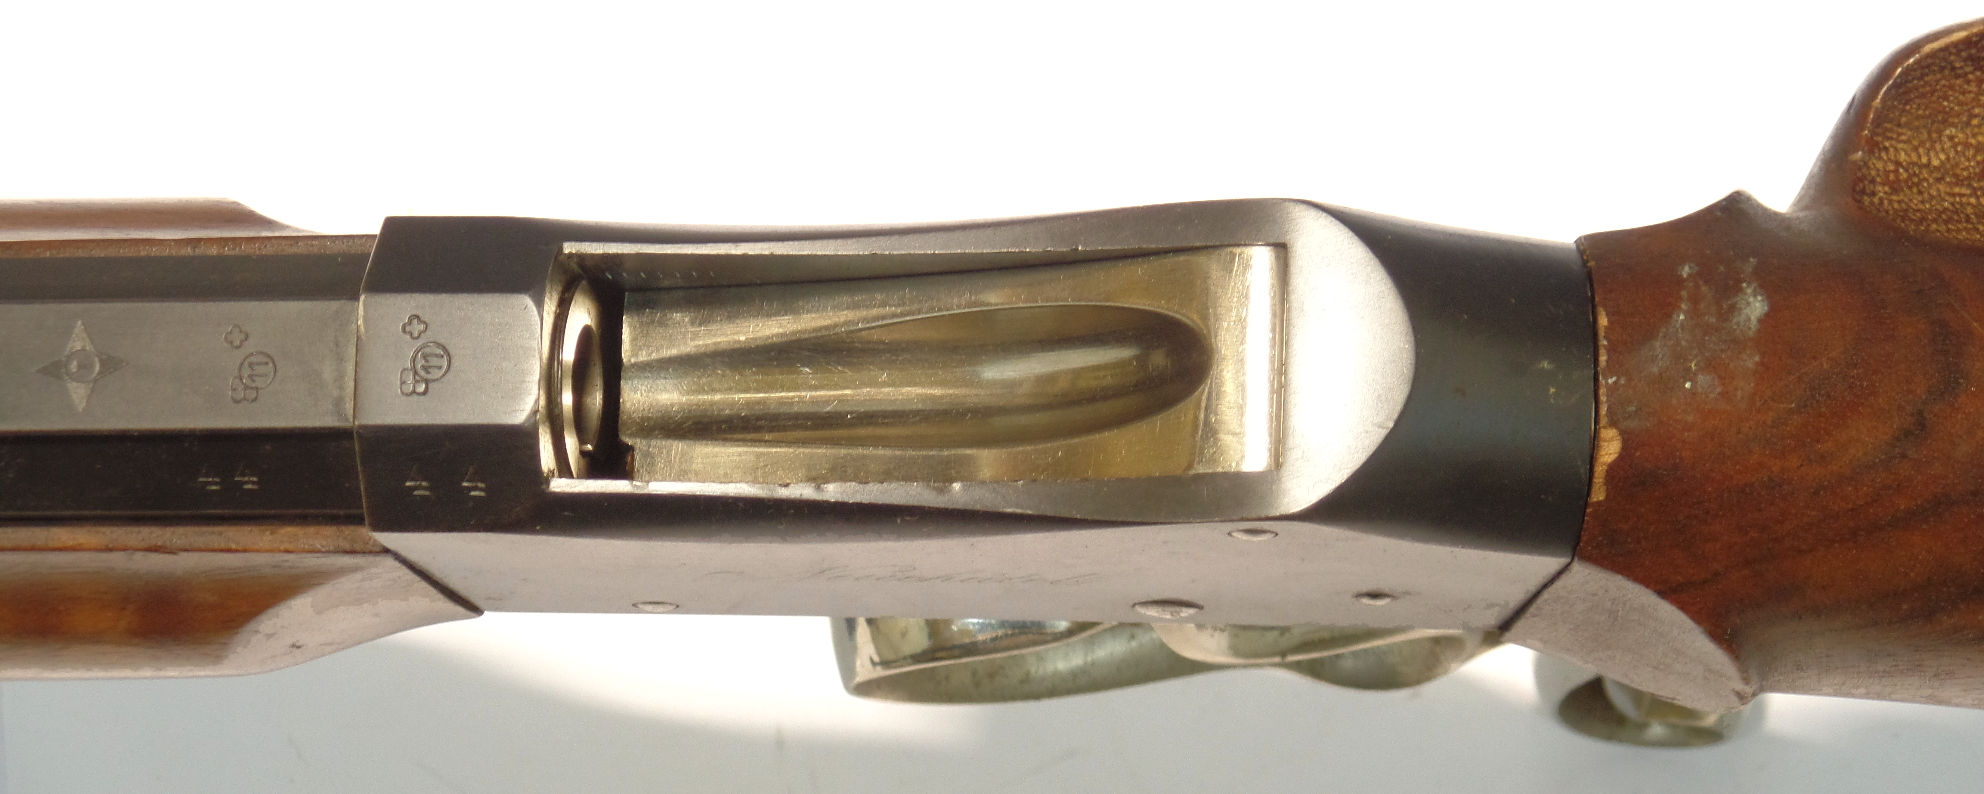 Carabine Match type Martini calibre 7.5x55